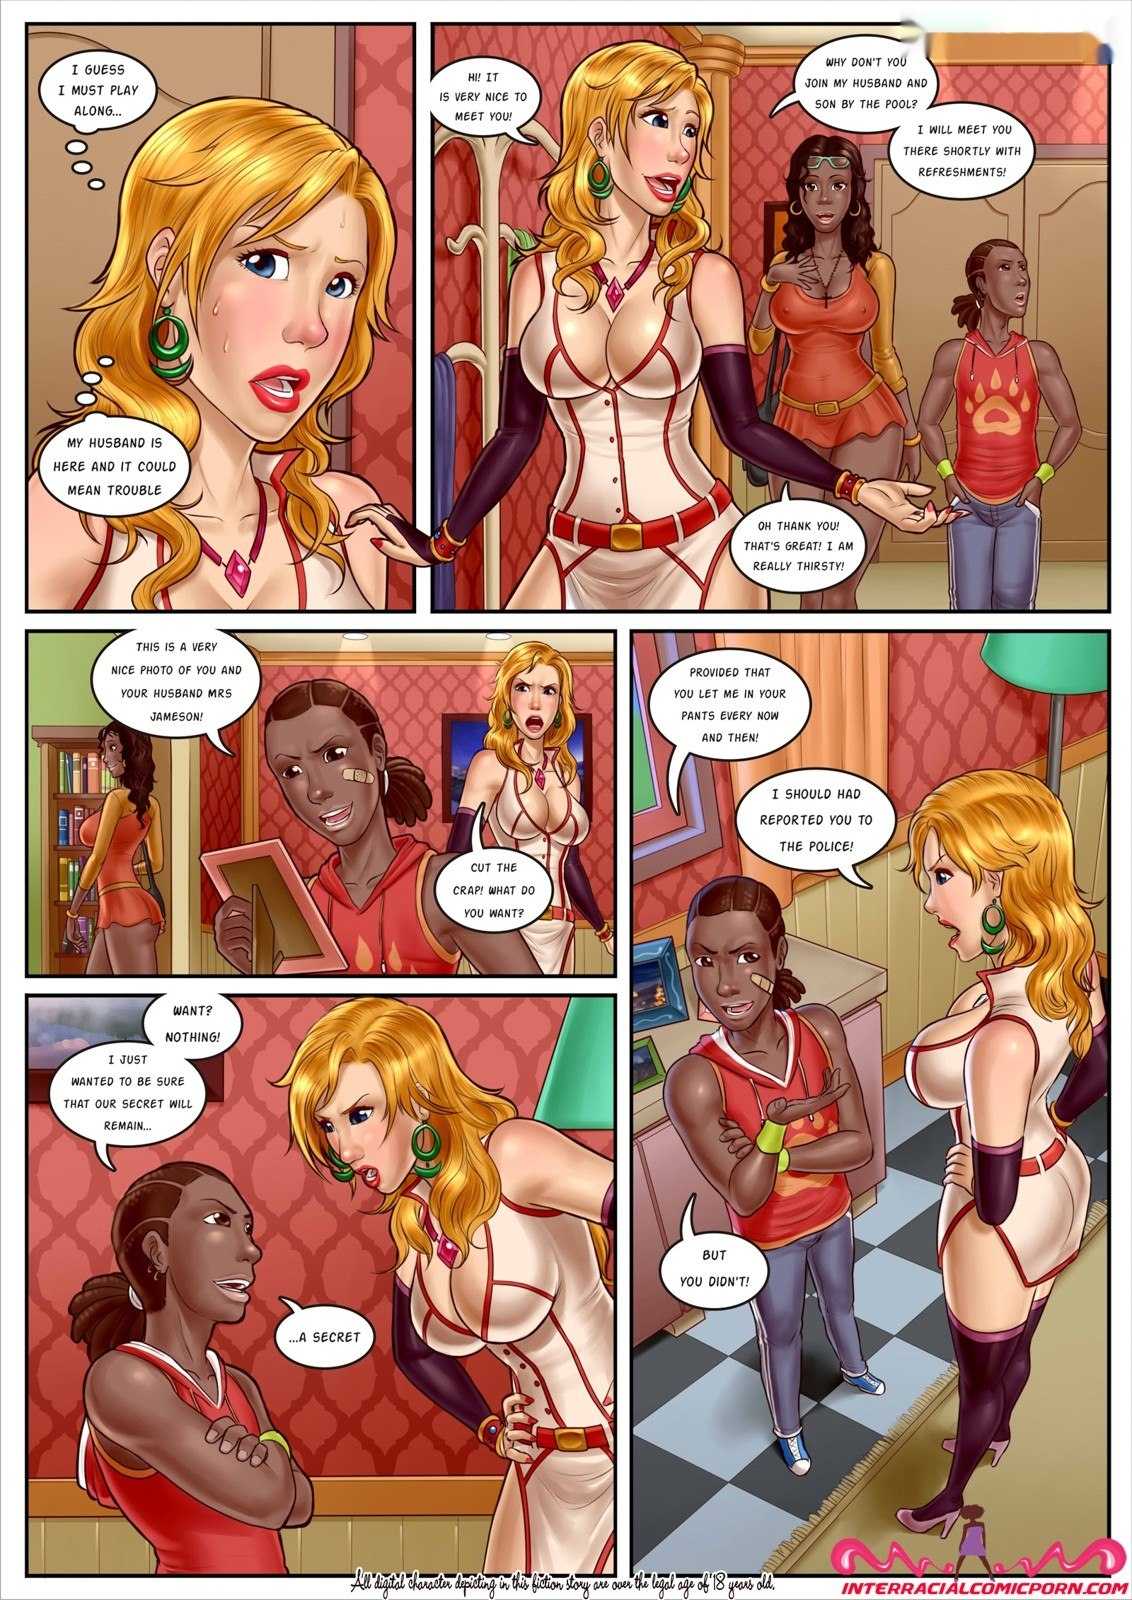 Party Slut Part 3 â€“ InterracialComicPorn - Comics Army